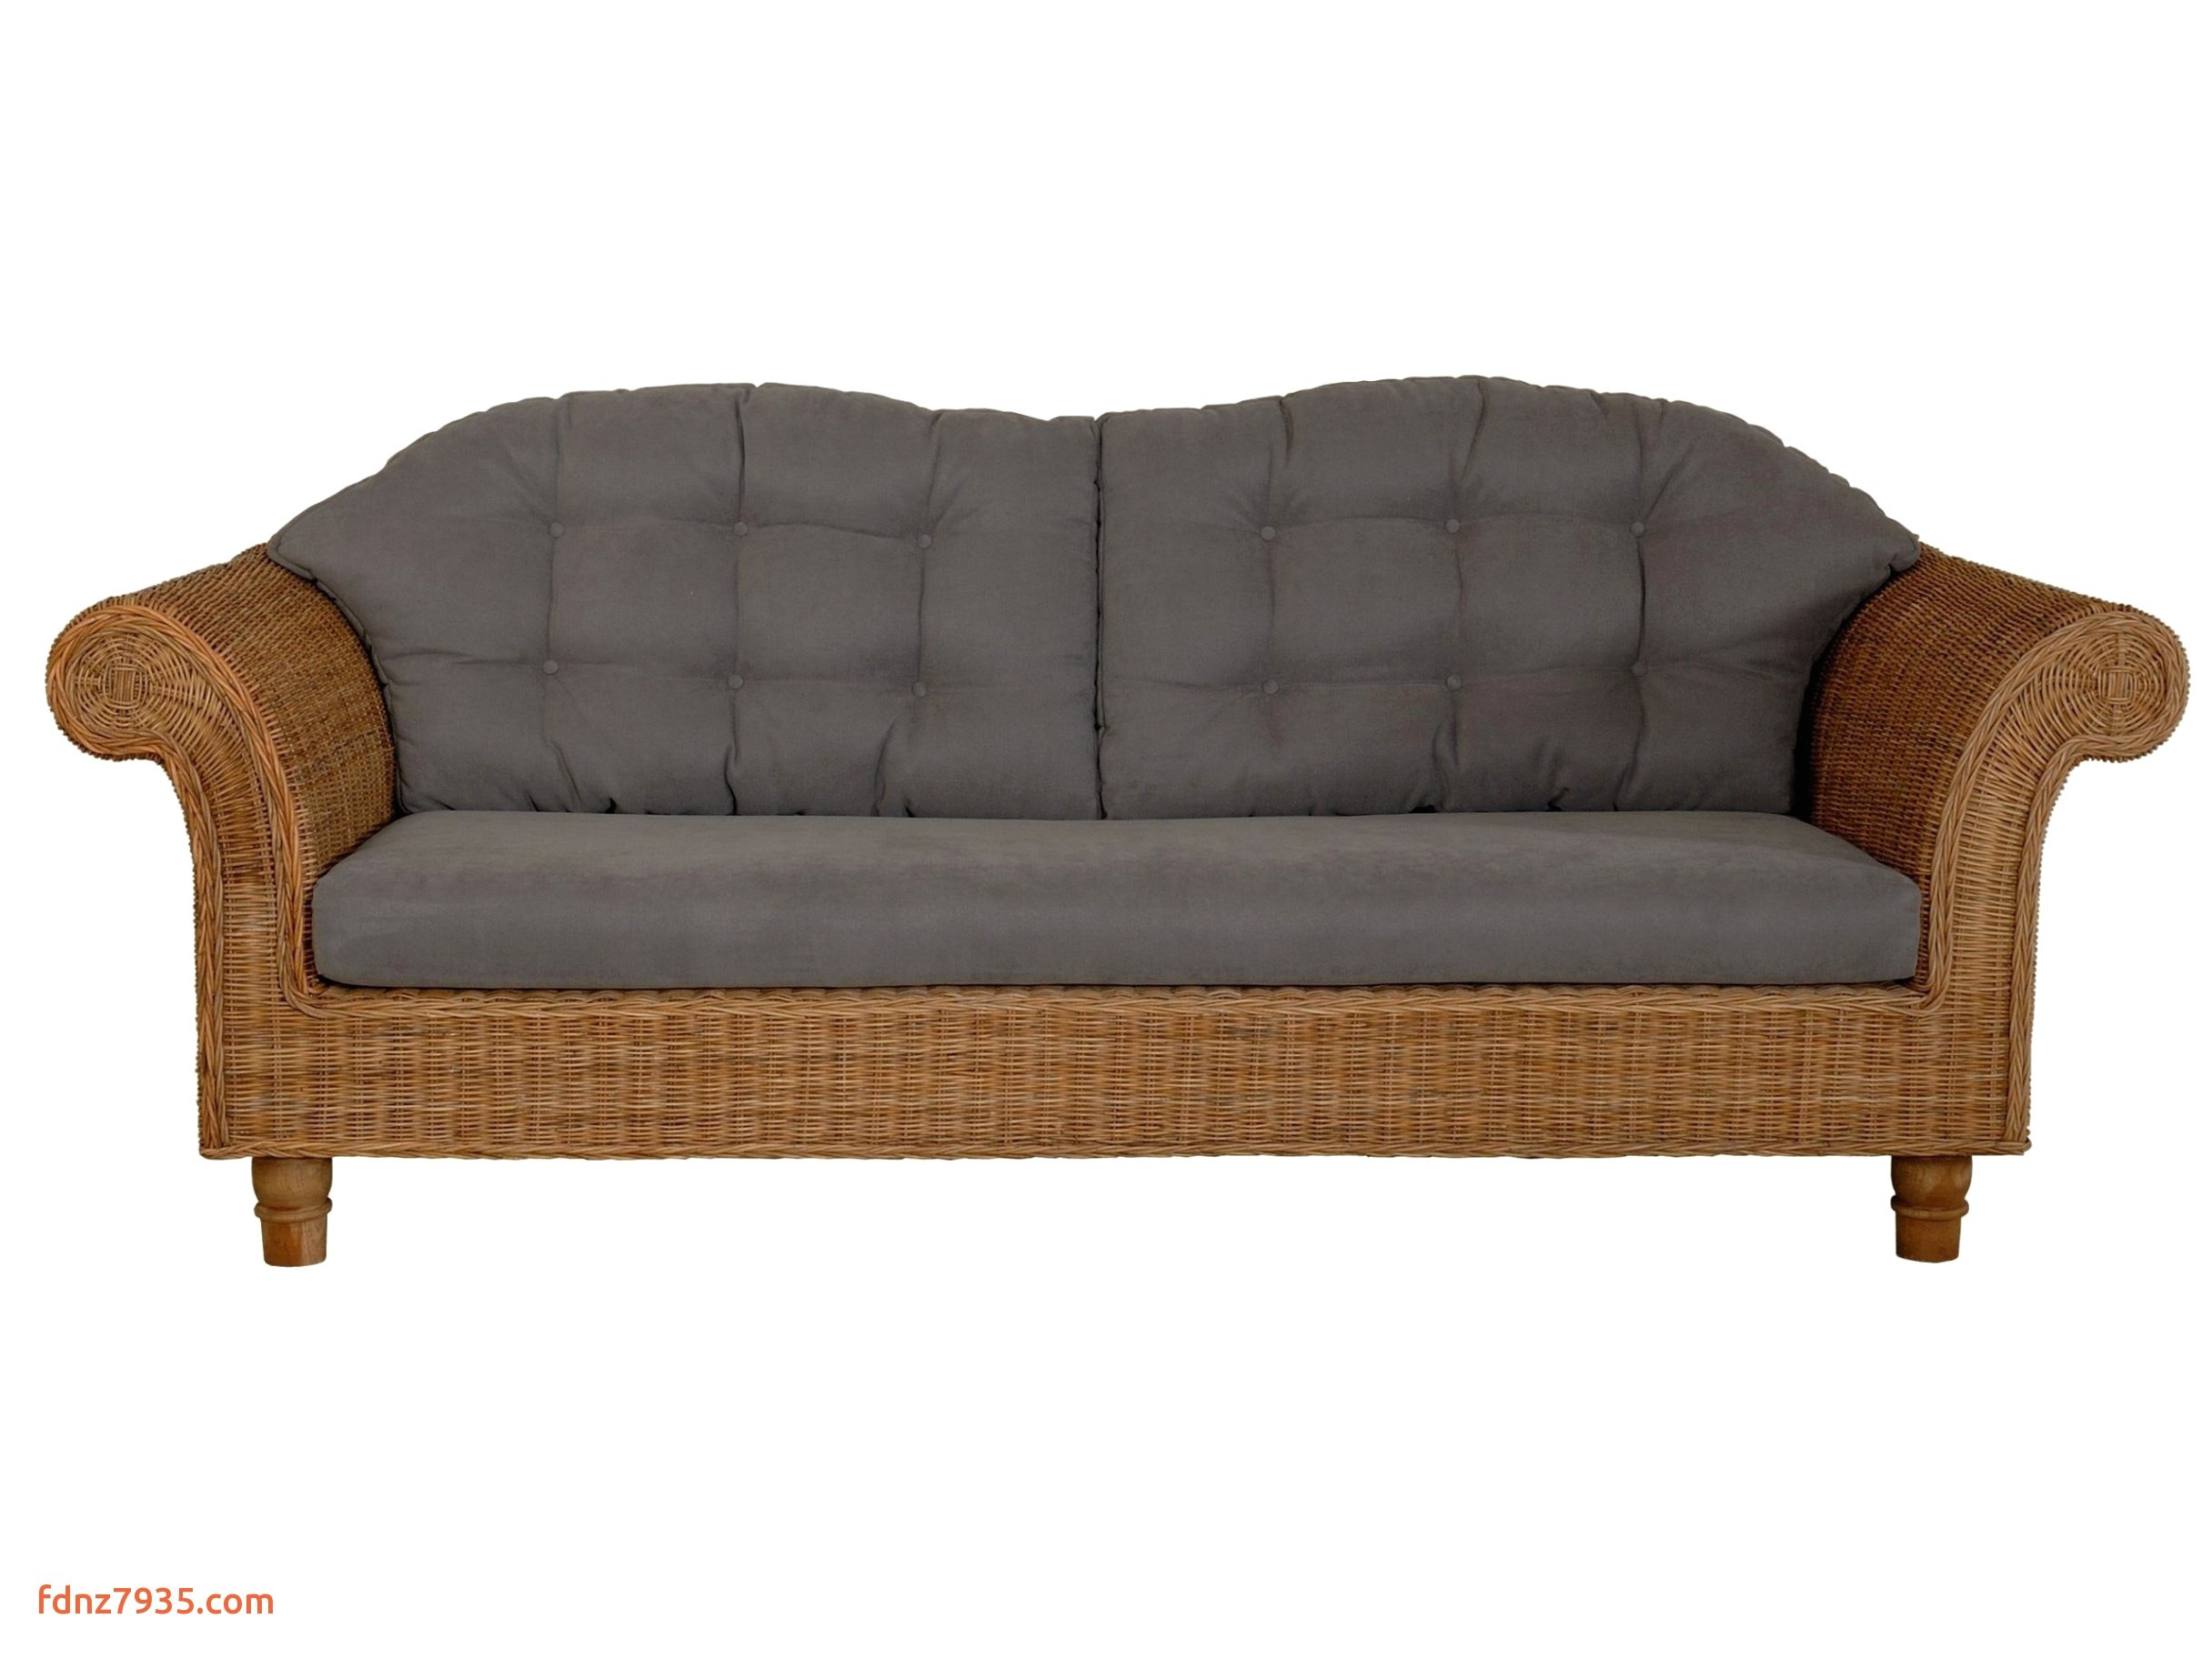 full size leather sleeper sofa inspirational rattan ecksofa wohnzimmer und inspirierend rattan couch 0d archives